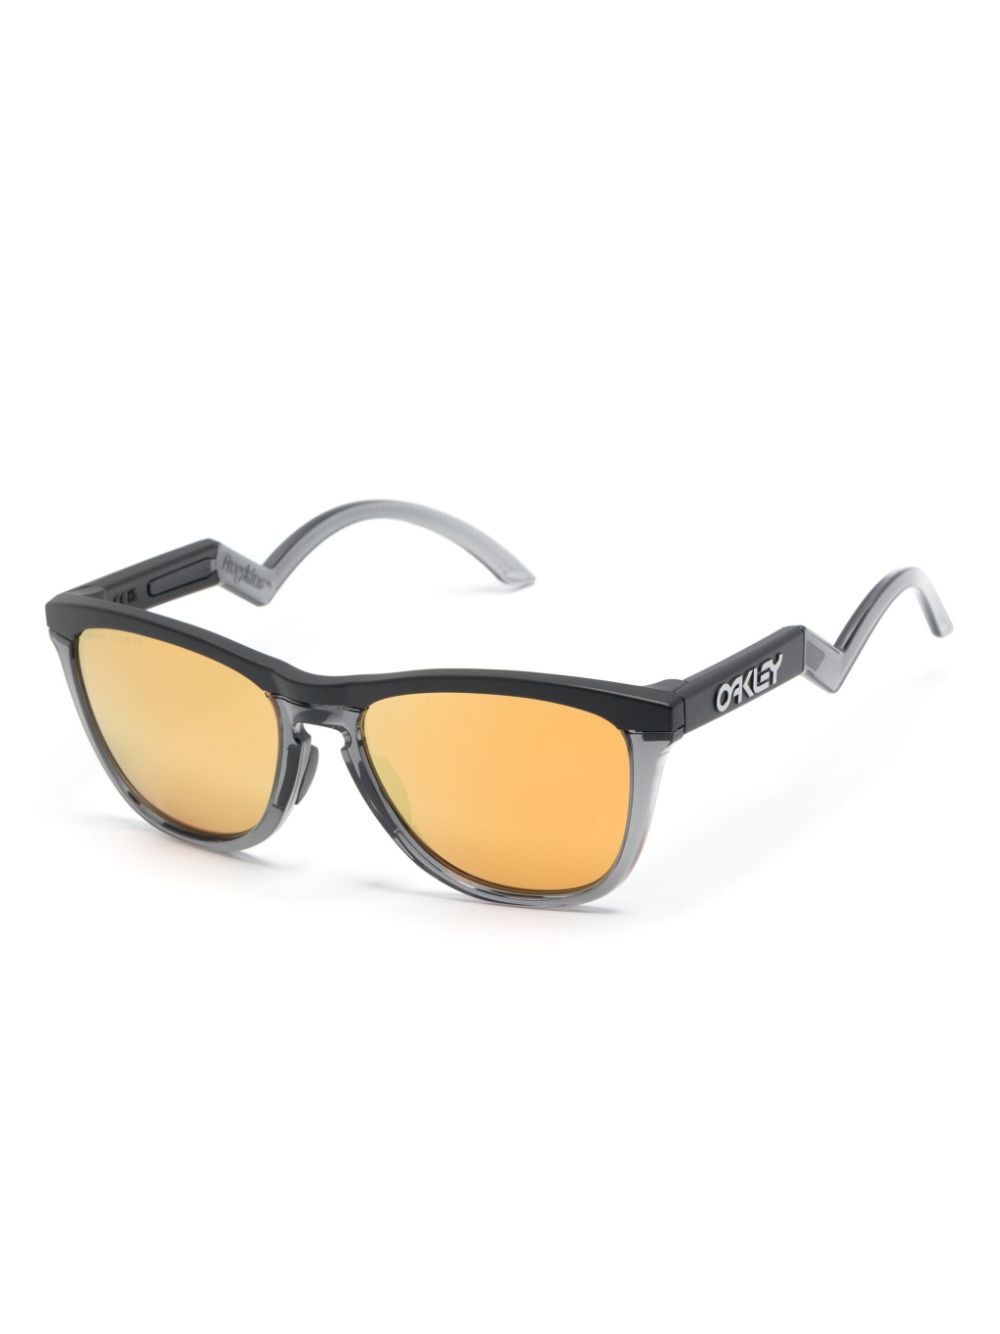 Frogskins square-frame sunglasses